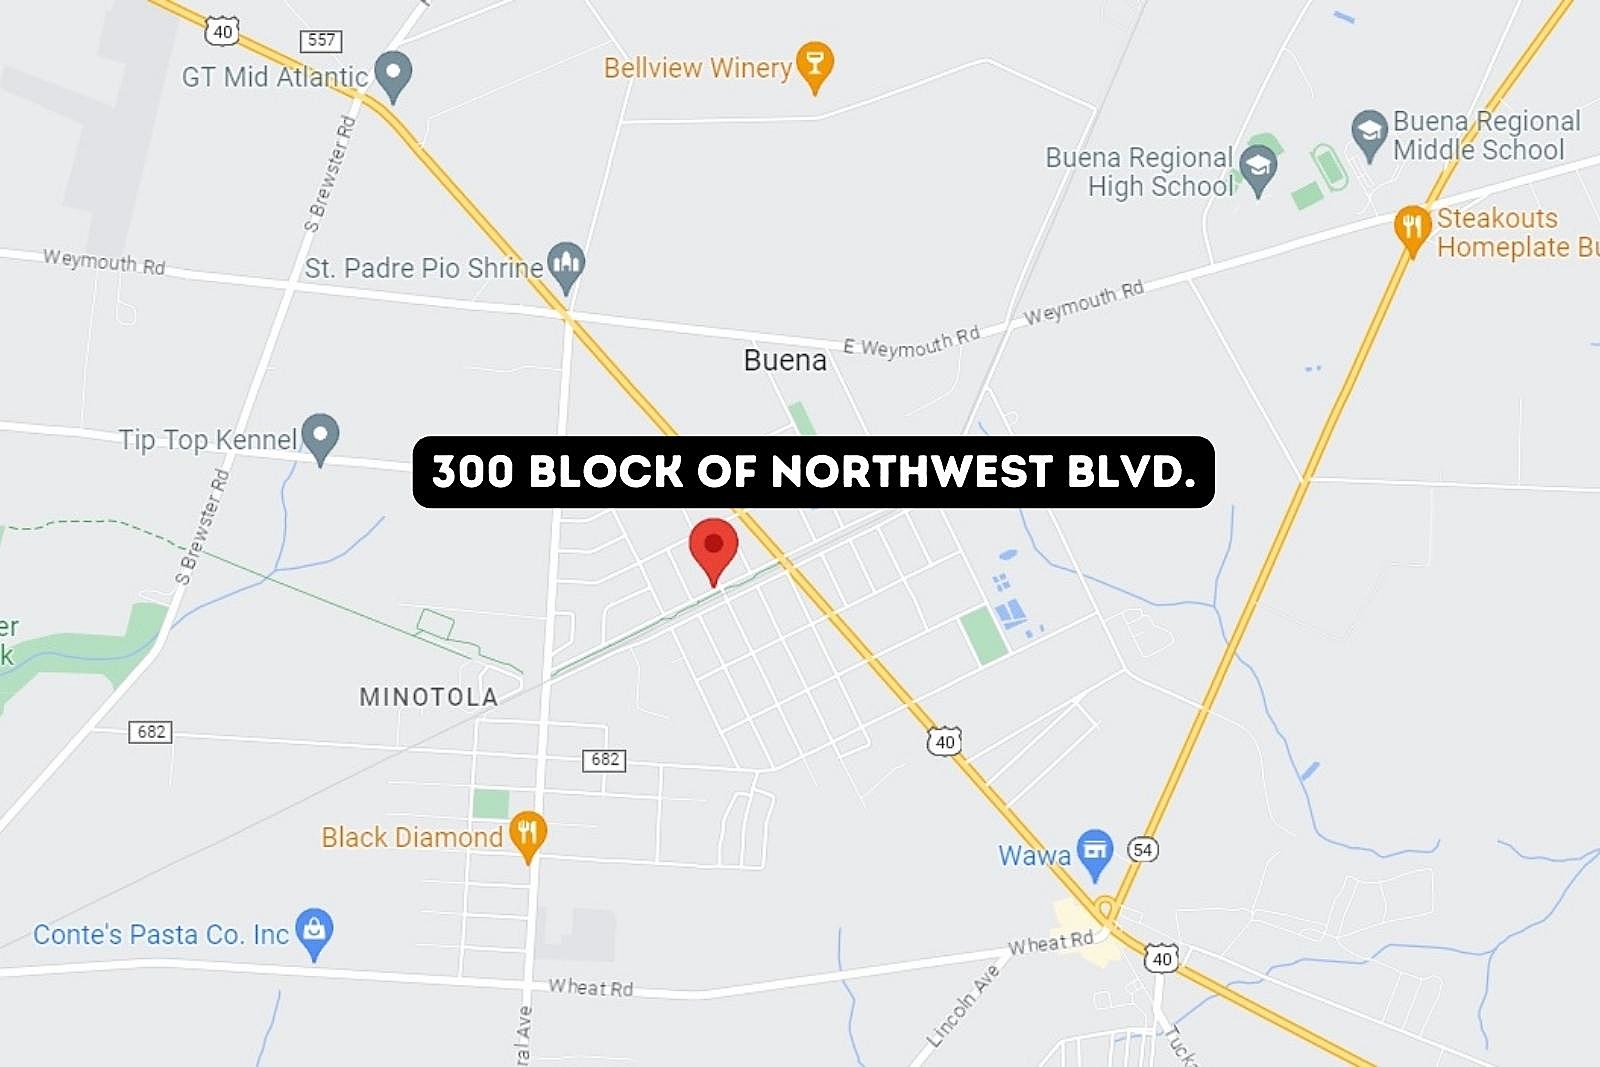 300 Block of Northwest Blvd. in Buena NJ - Photo: Google Maps / TSM Illustration